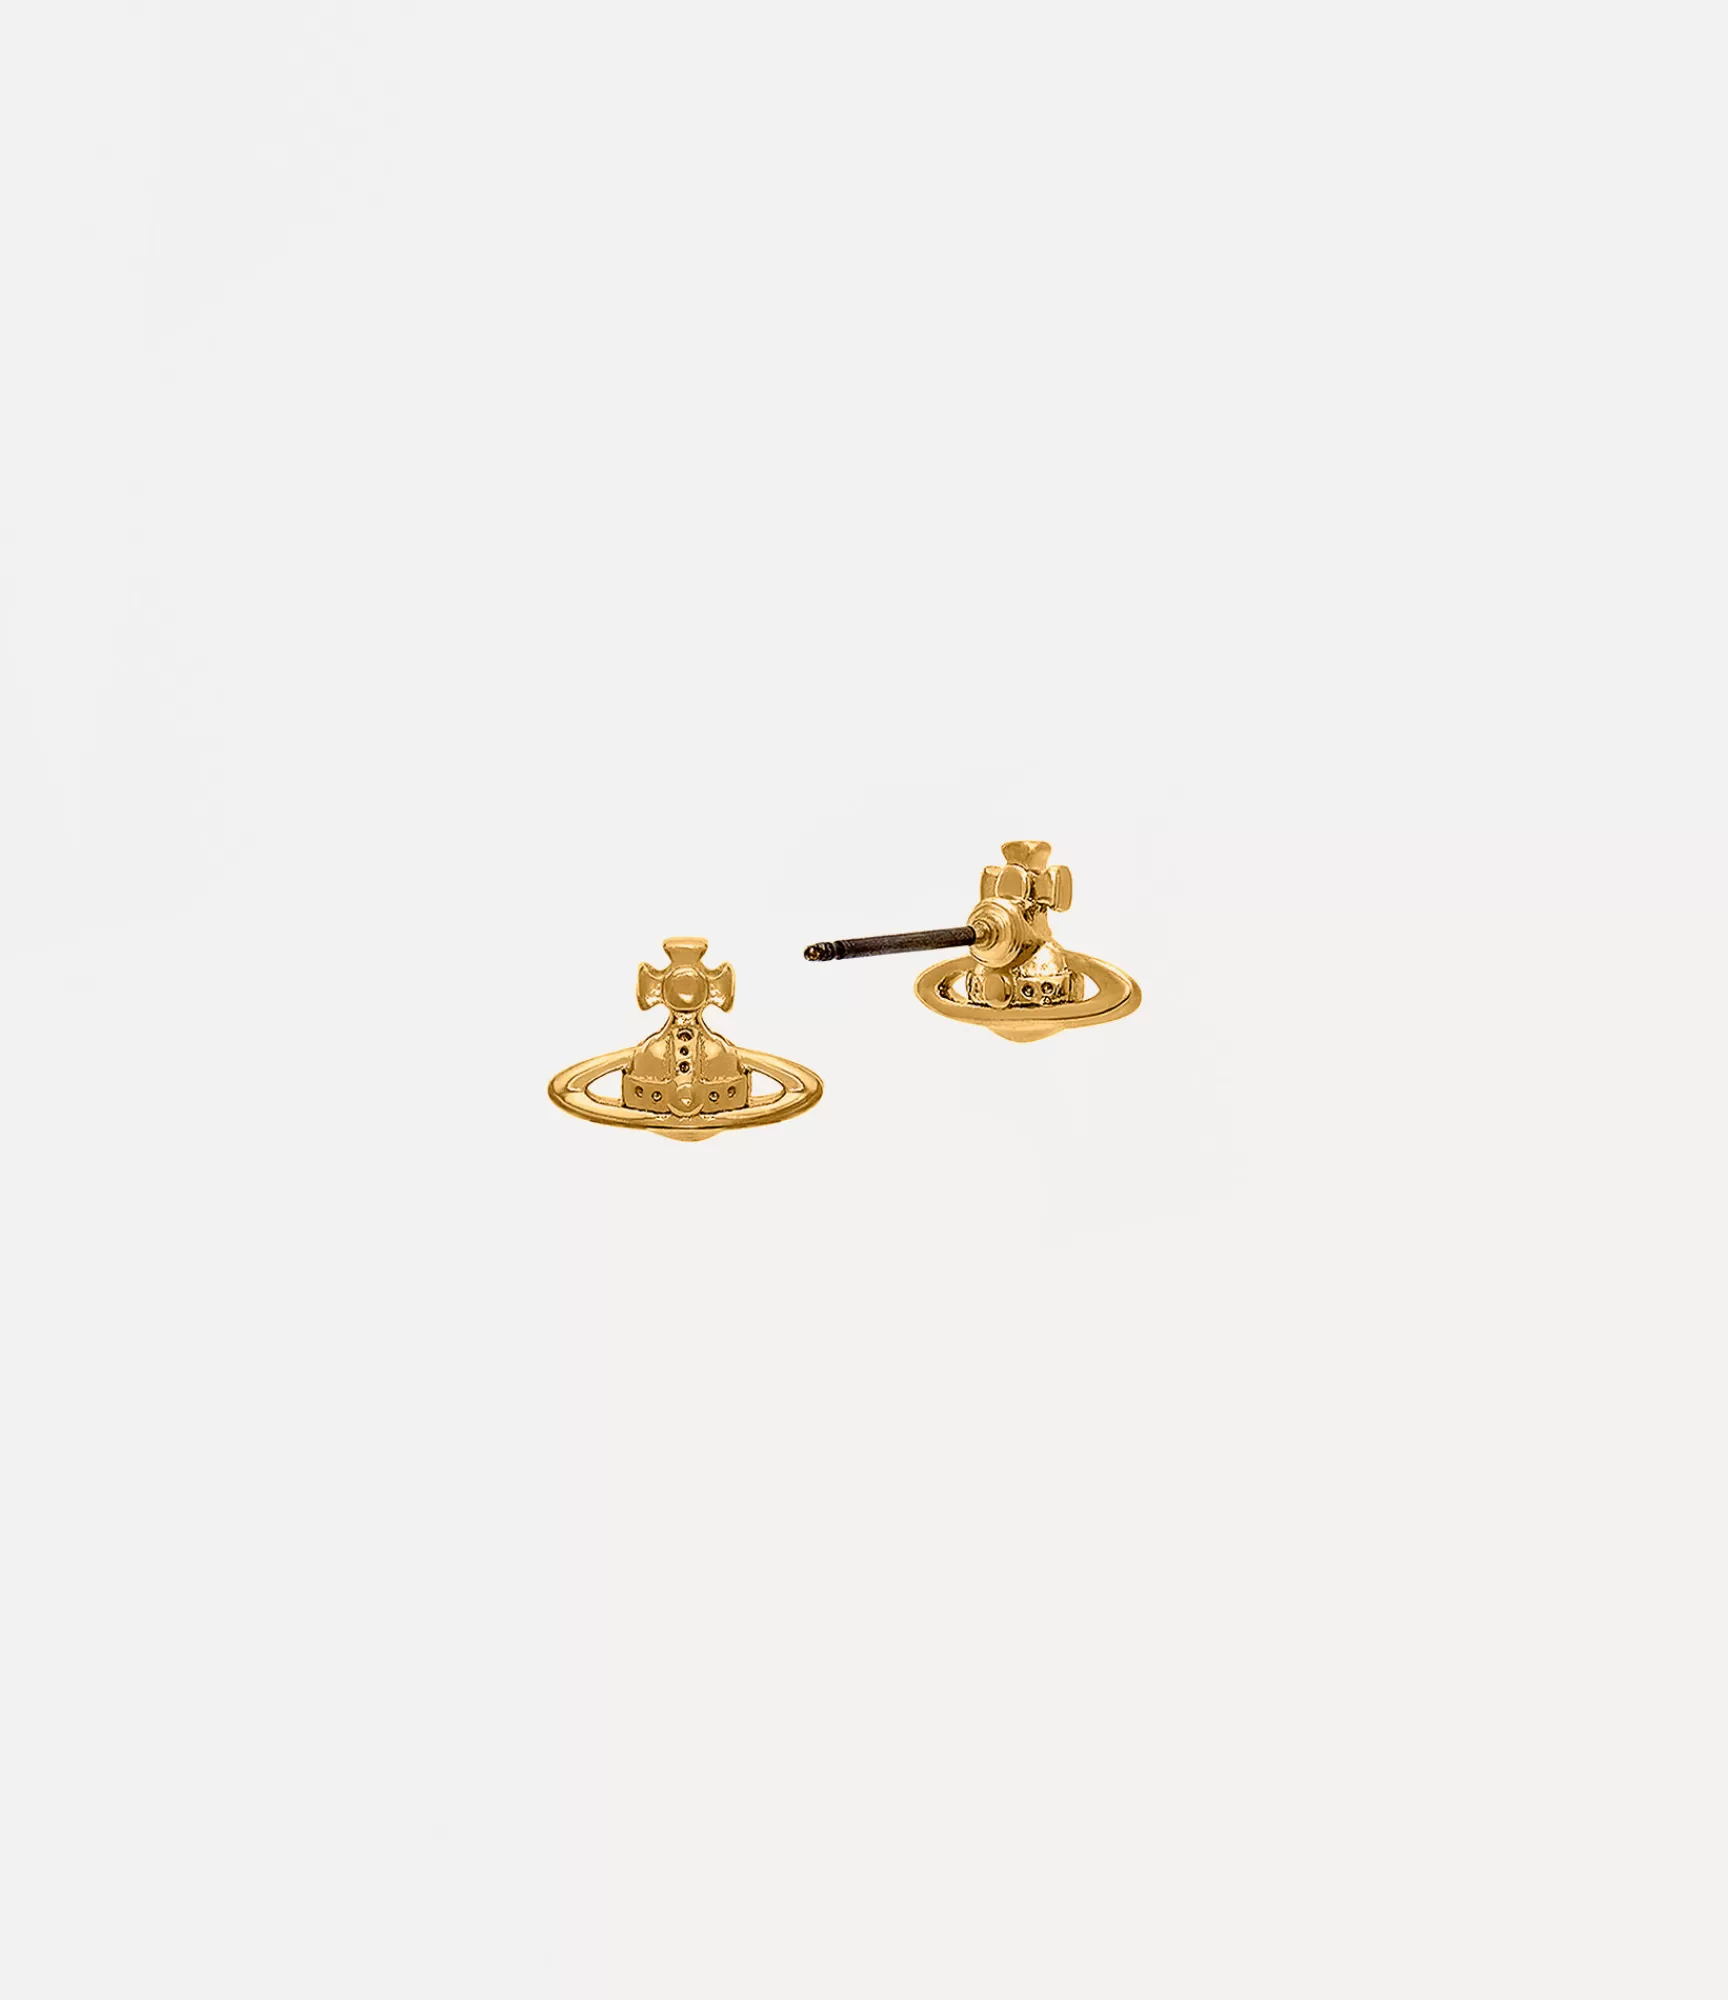 Vivienne Westwood Earrings*Lorelei stud earrings Gold